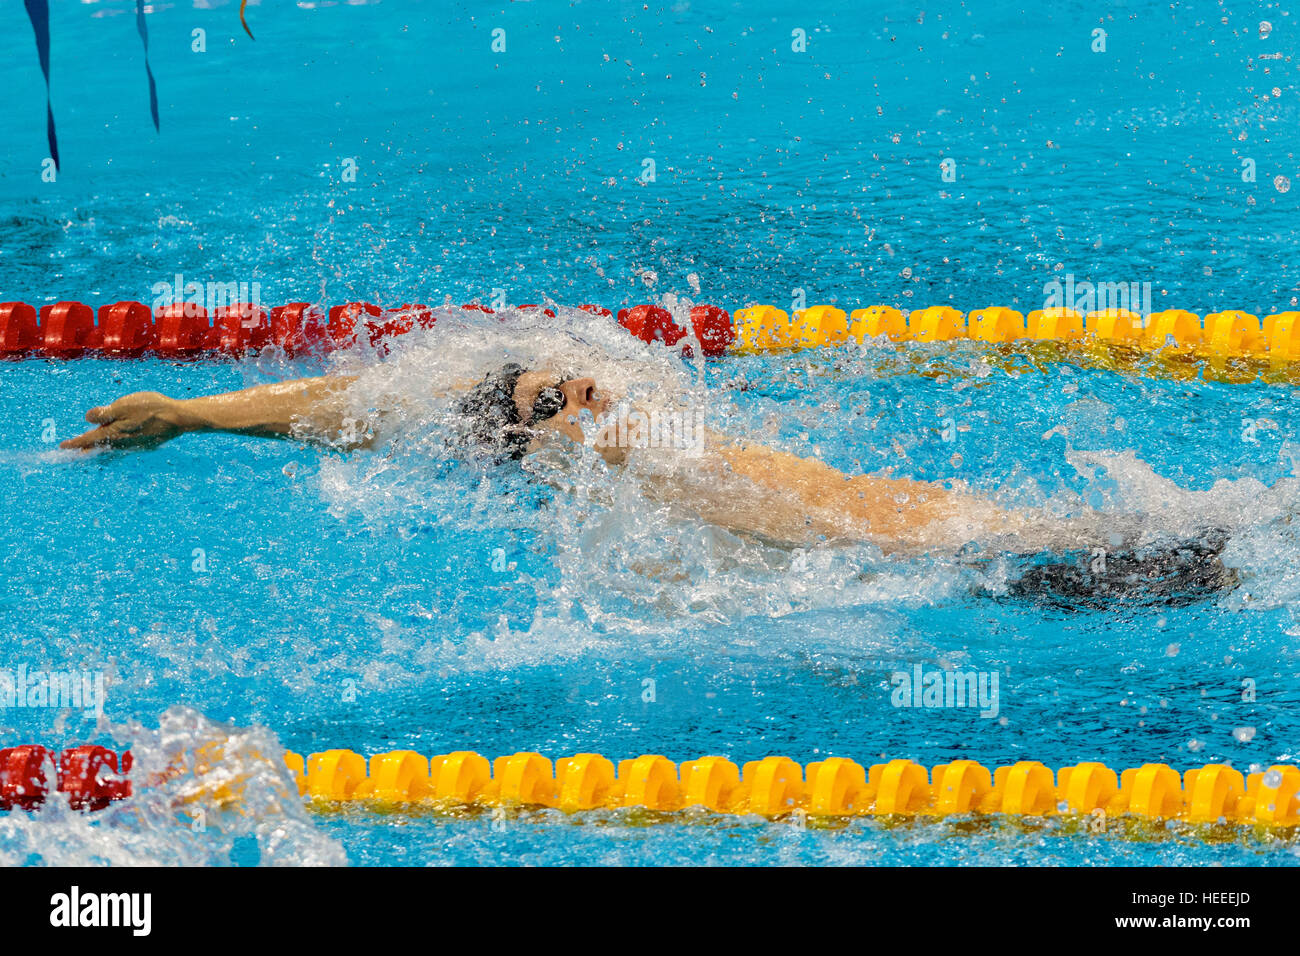 Rio de Janeiro, Brazil. 7 August 2016.  Ryan Murphy (USA) competing in the men's 100m backstroke semi final at the 2016 Olympic Summer Games. ©Paul J. Stock Photo